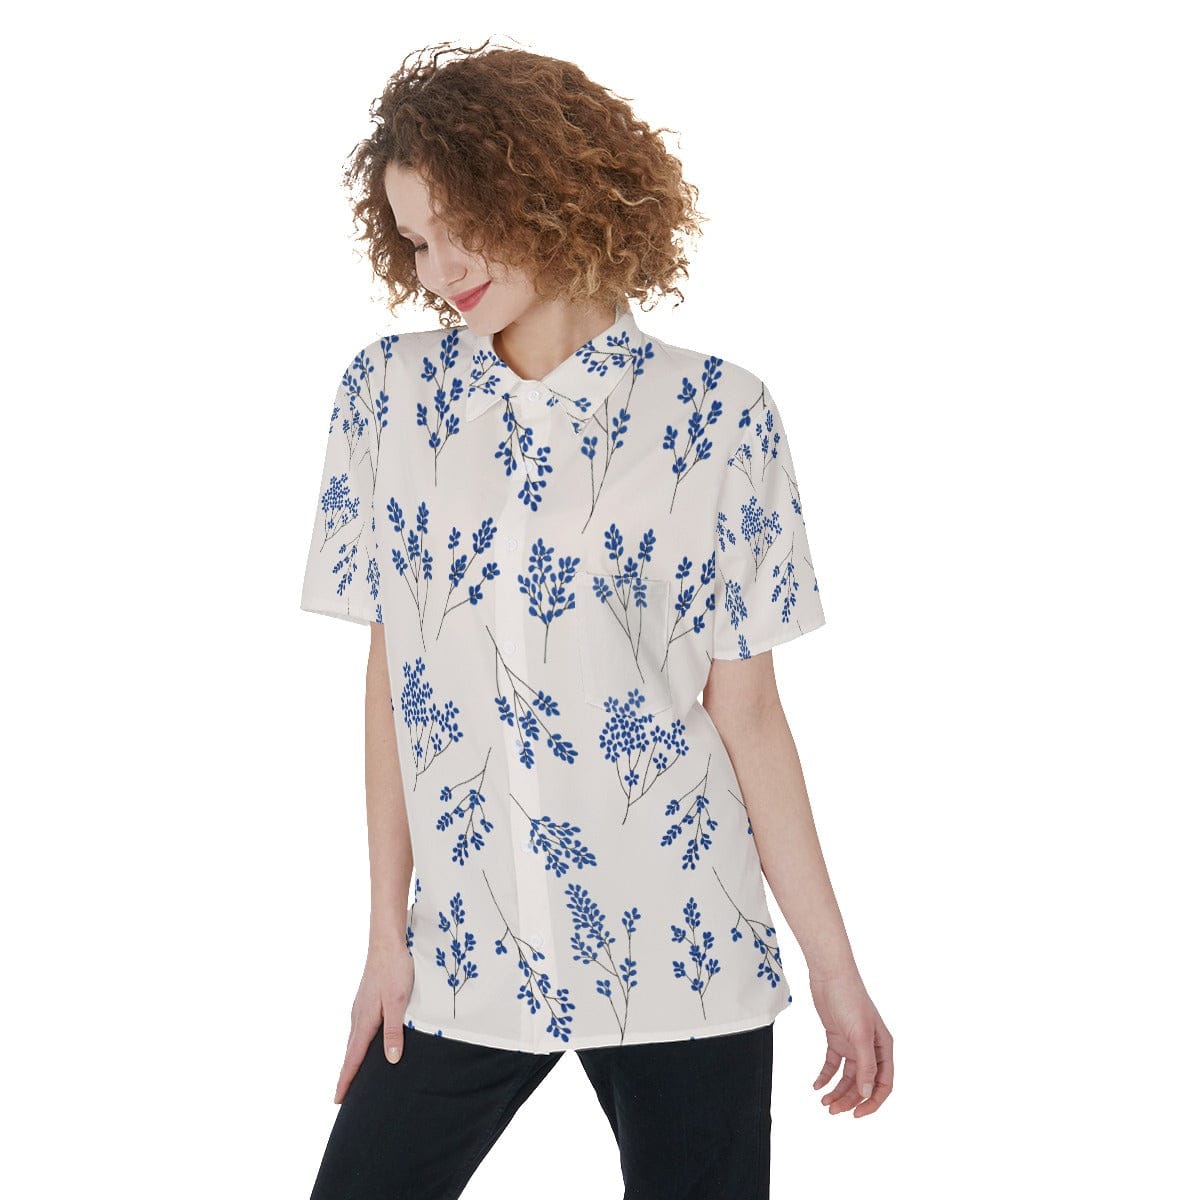 Yoycol 2XL / White Ecru Blue Floral Women's Short Sleeve Shirt With Pocket